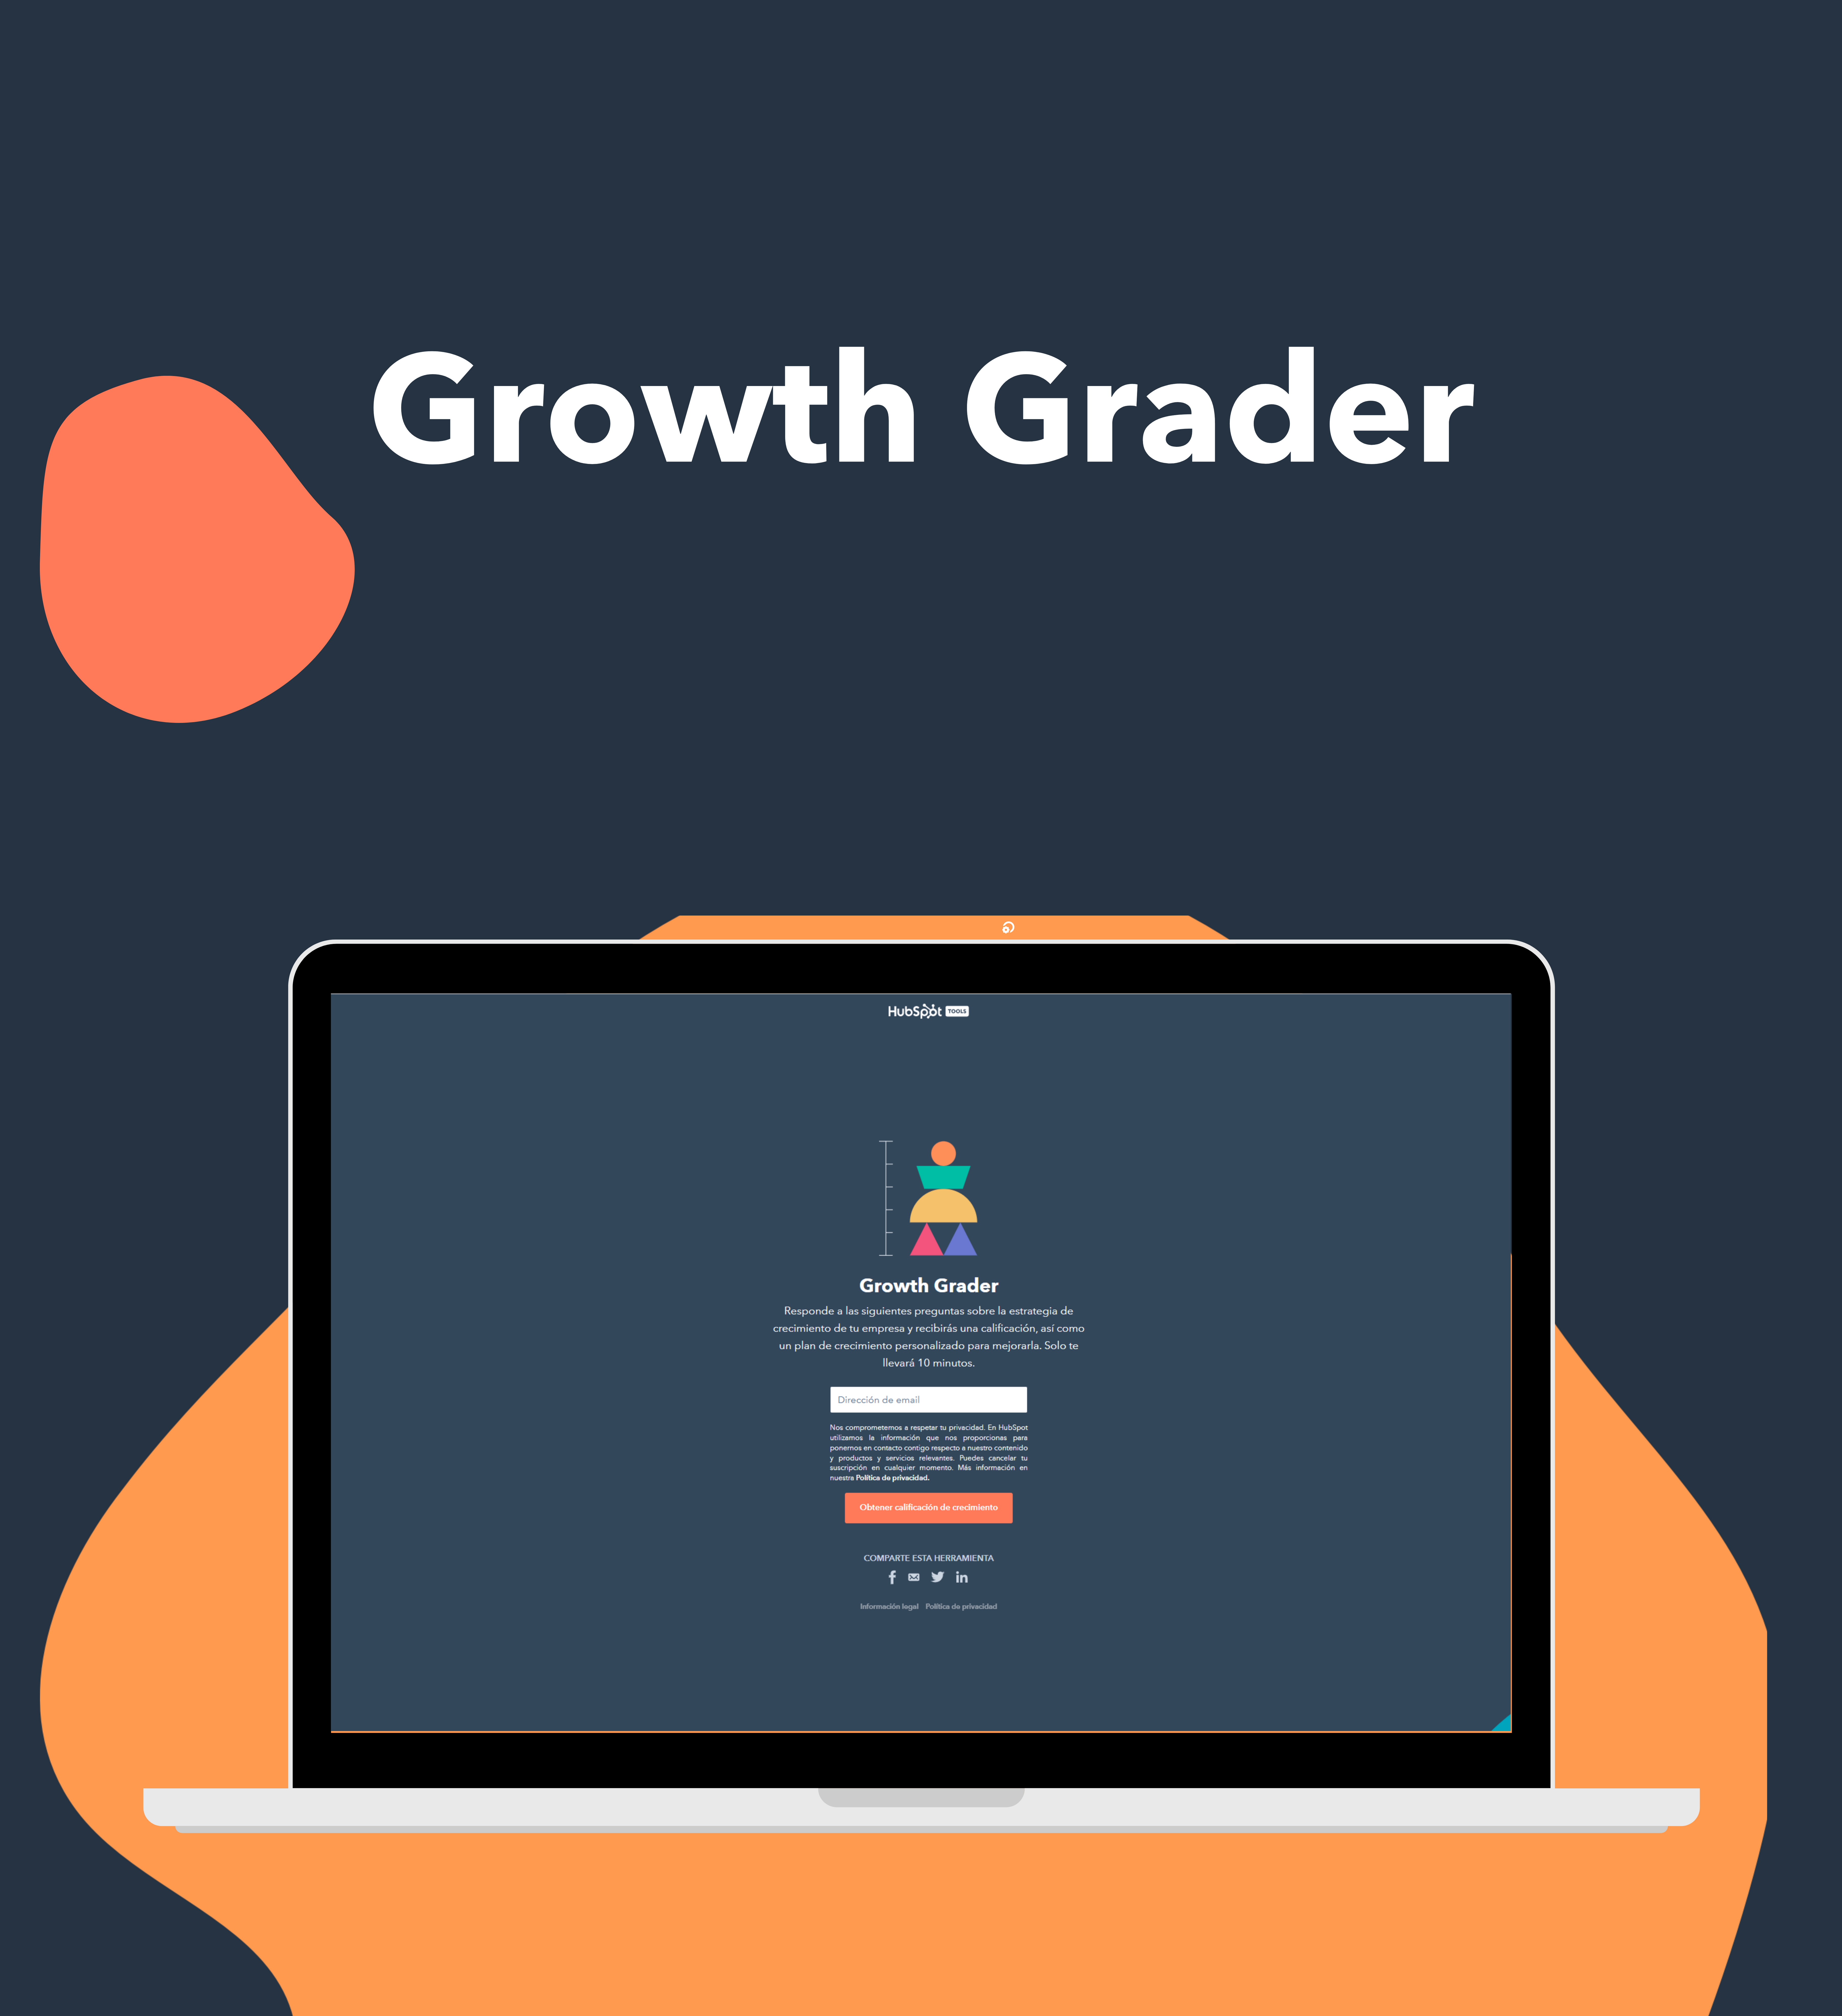 Growth grader